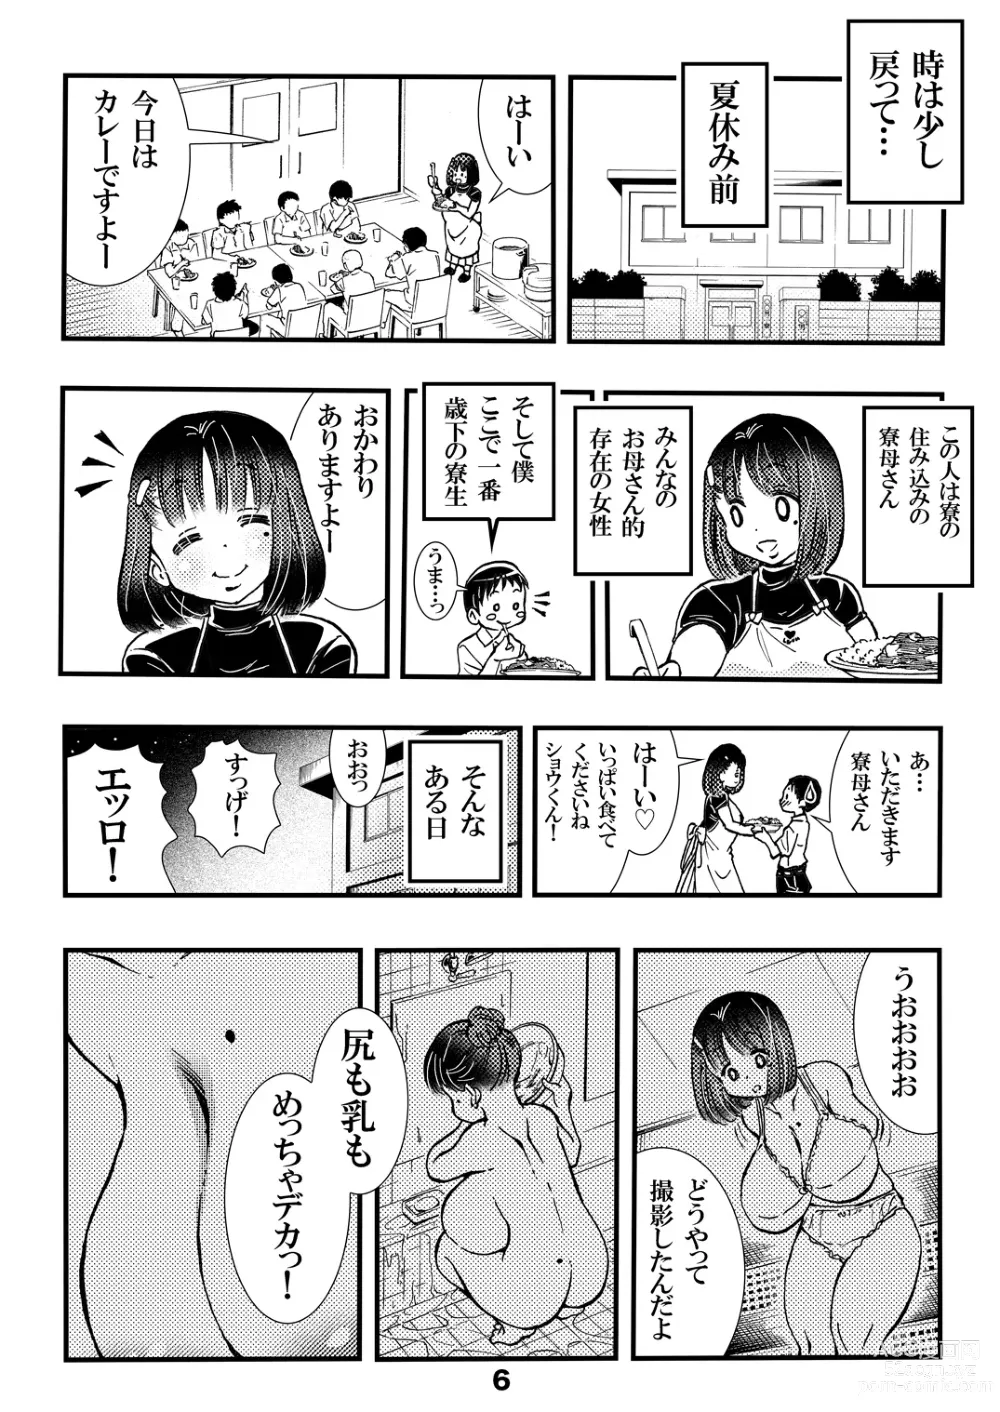 Page 6 of doujinshi Ryoubo-san no Oppai wa Kao yori Ookii